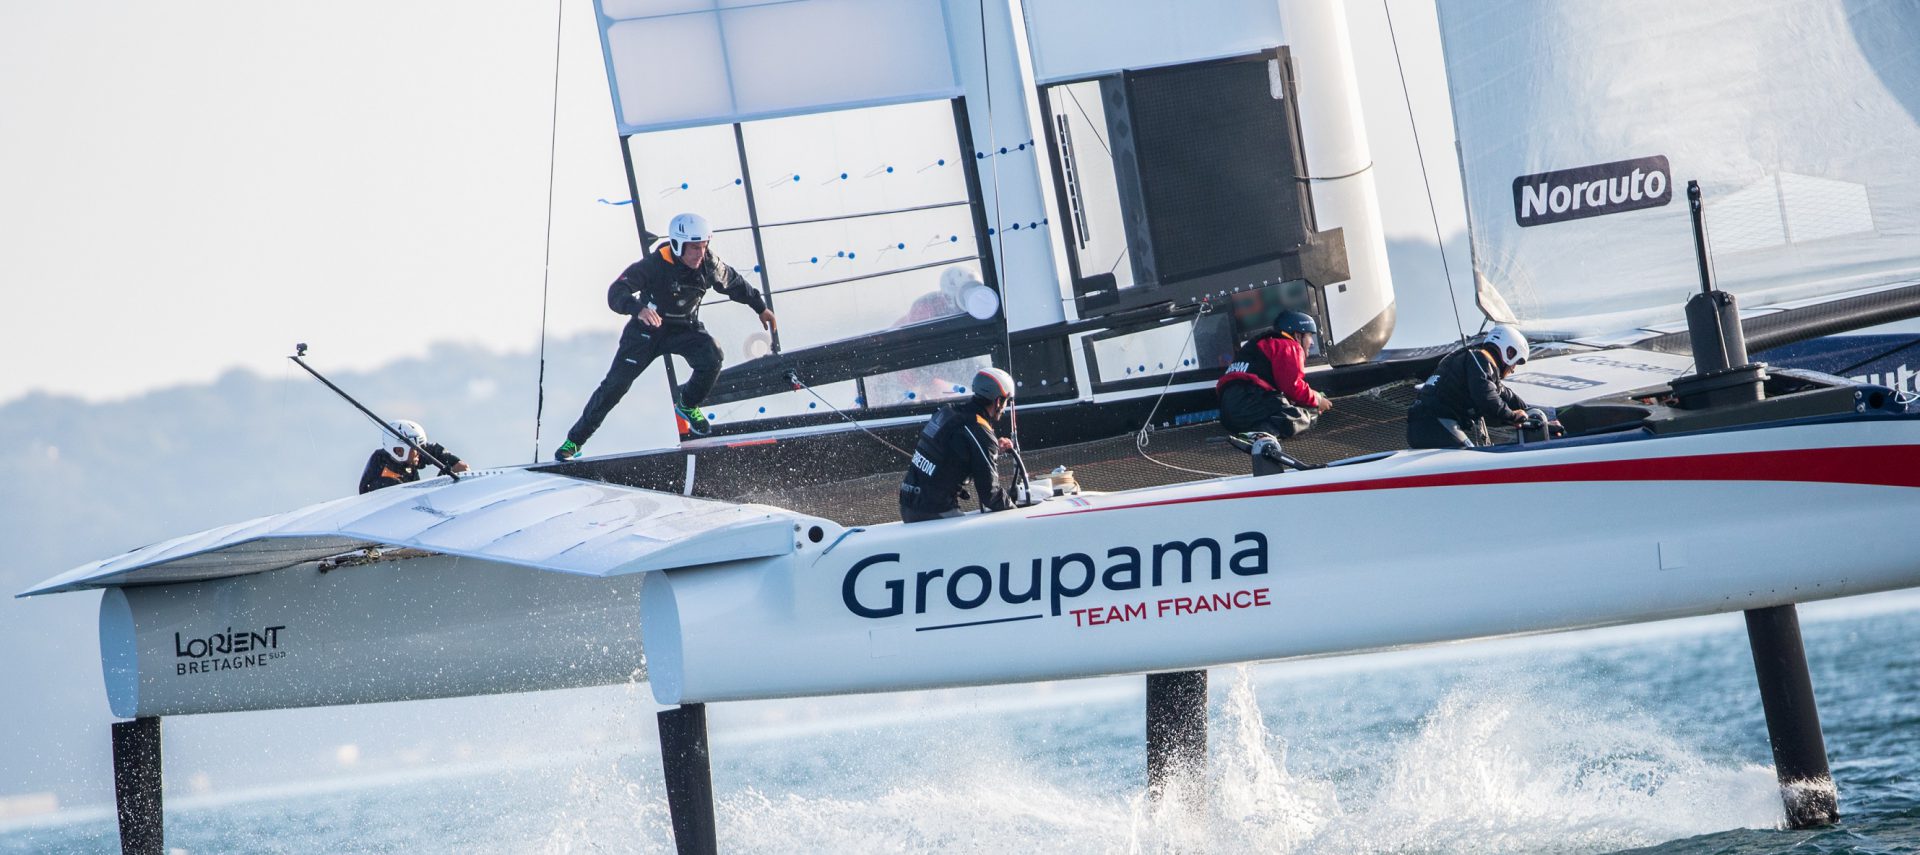  America's Cup News  Groupama Team France presents its catamaran